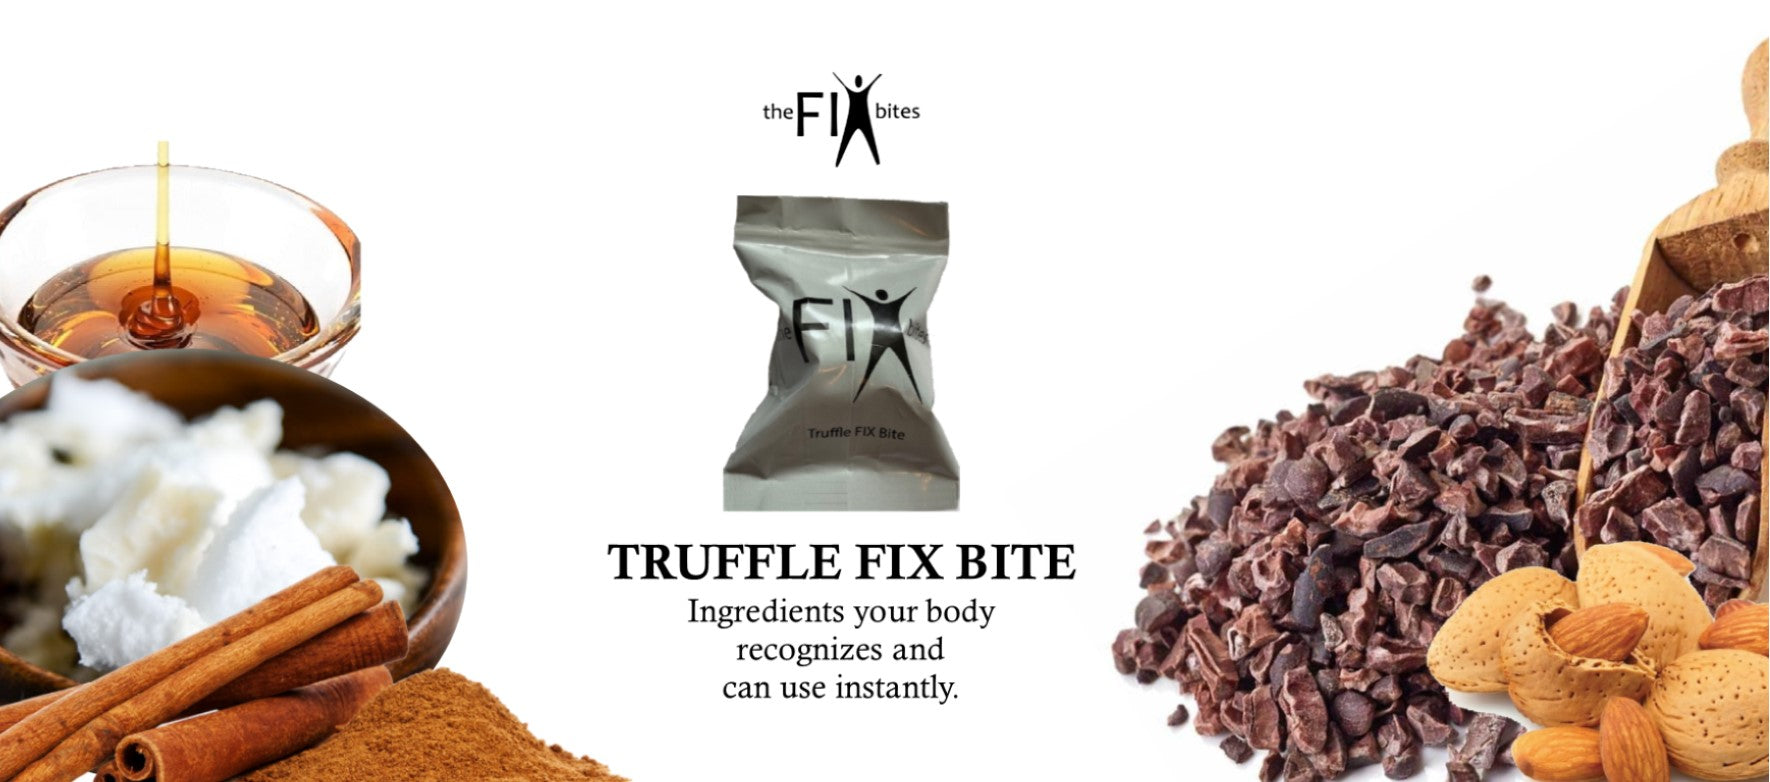 Truffle Fix Bite